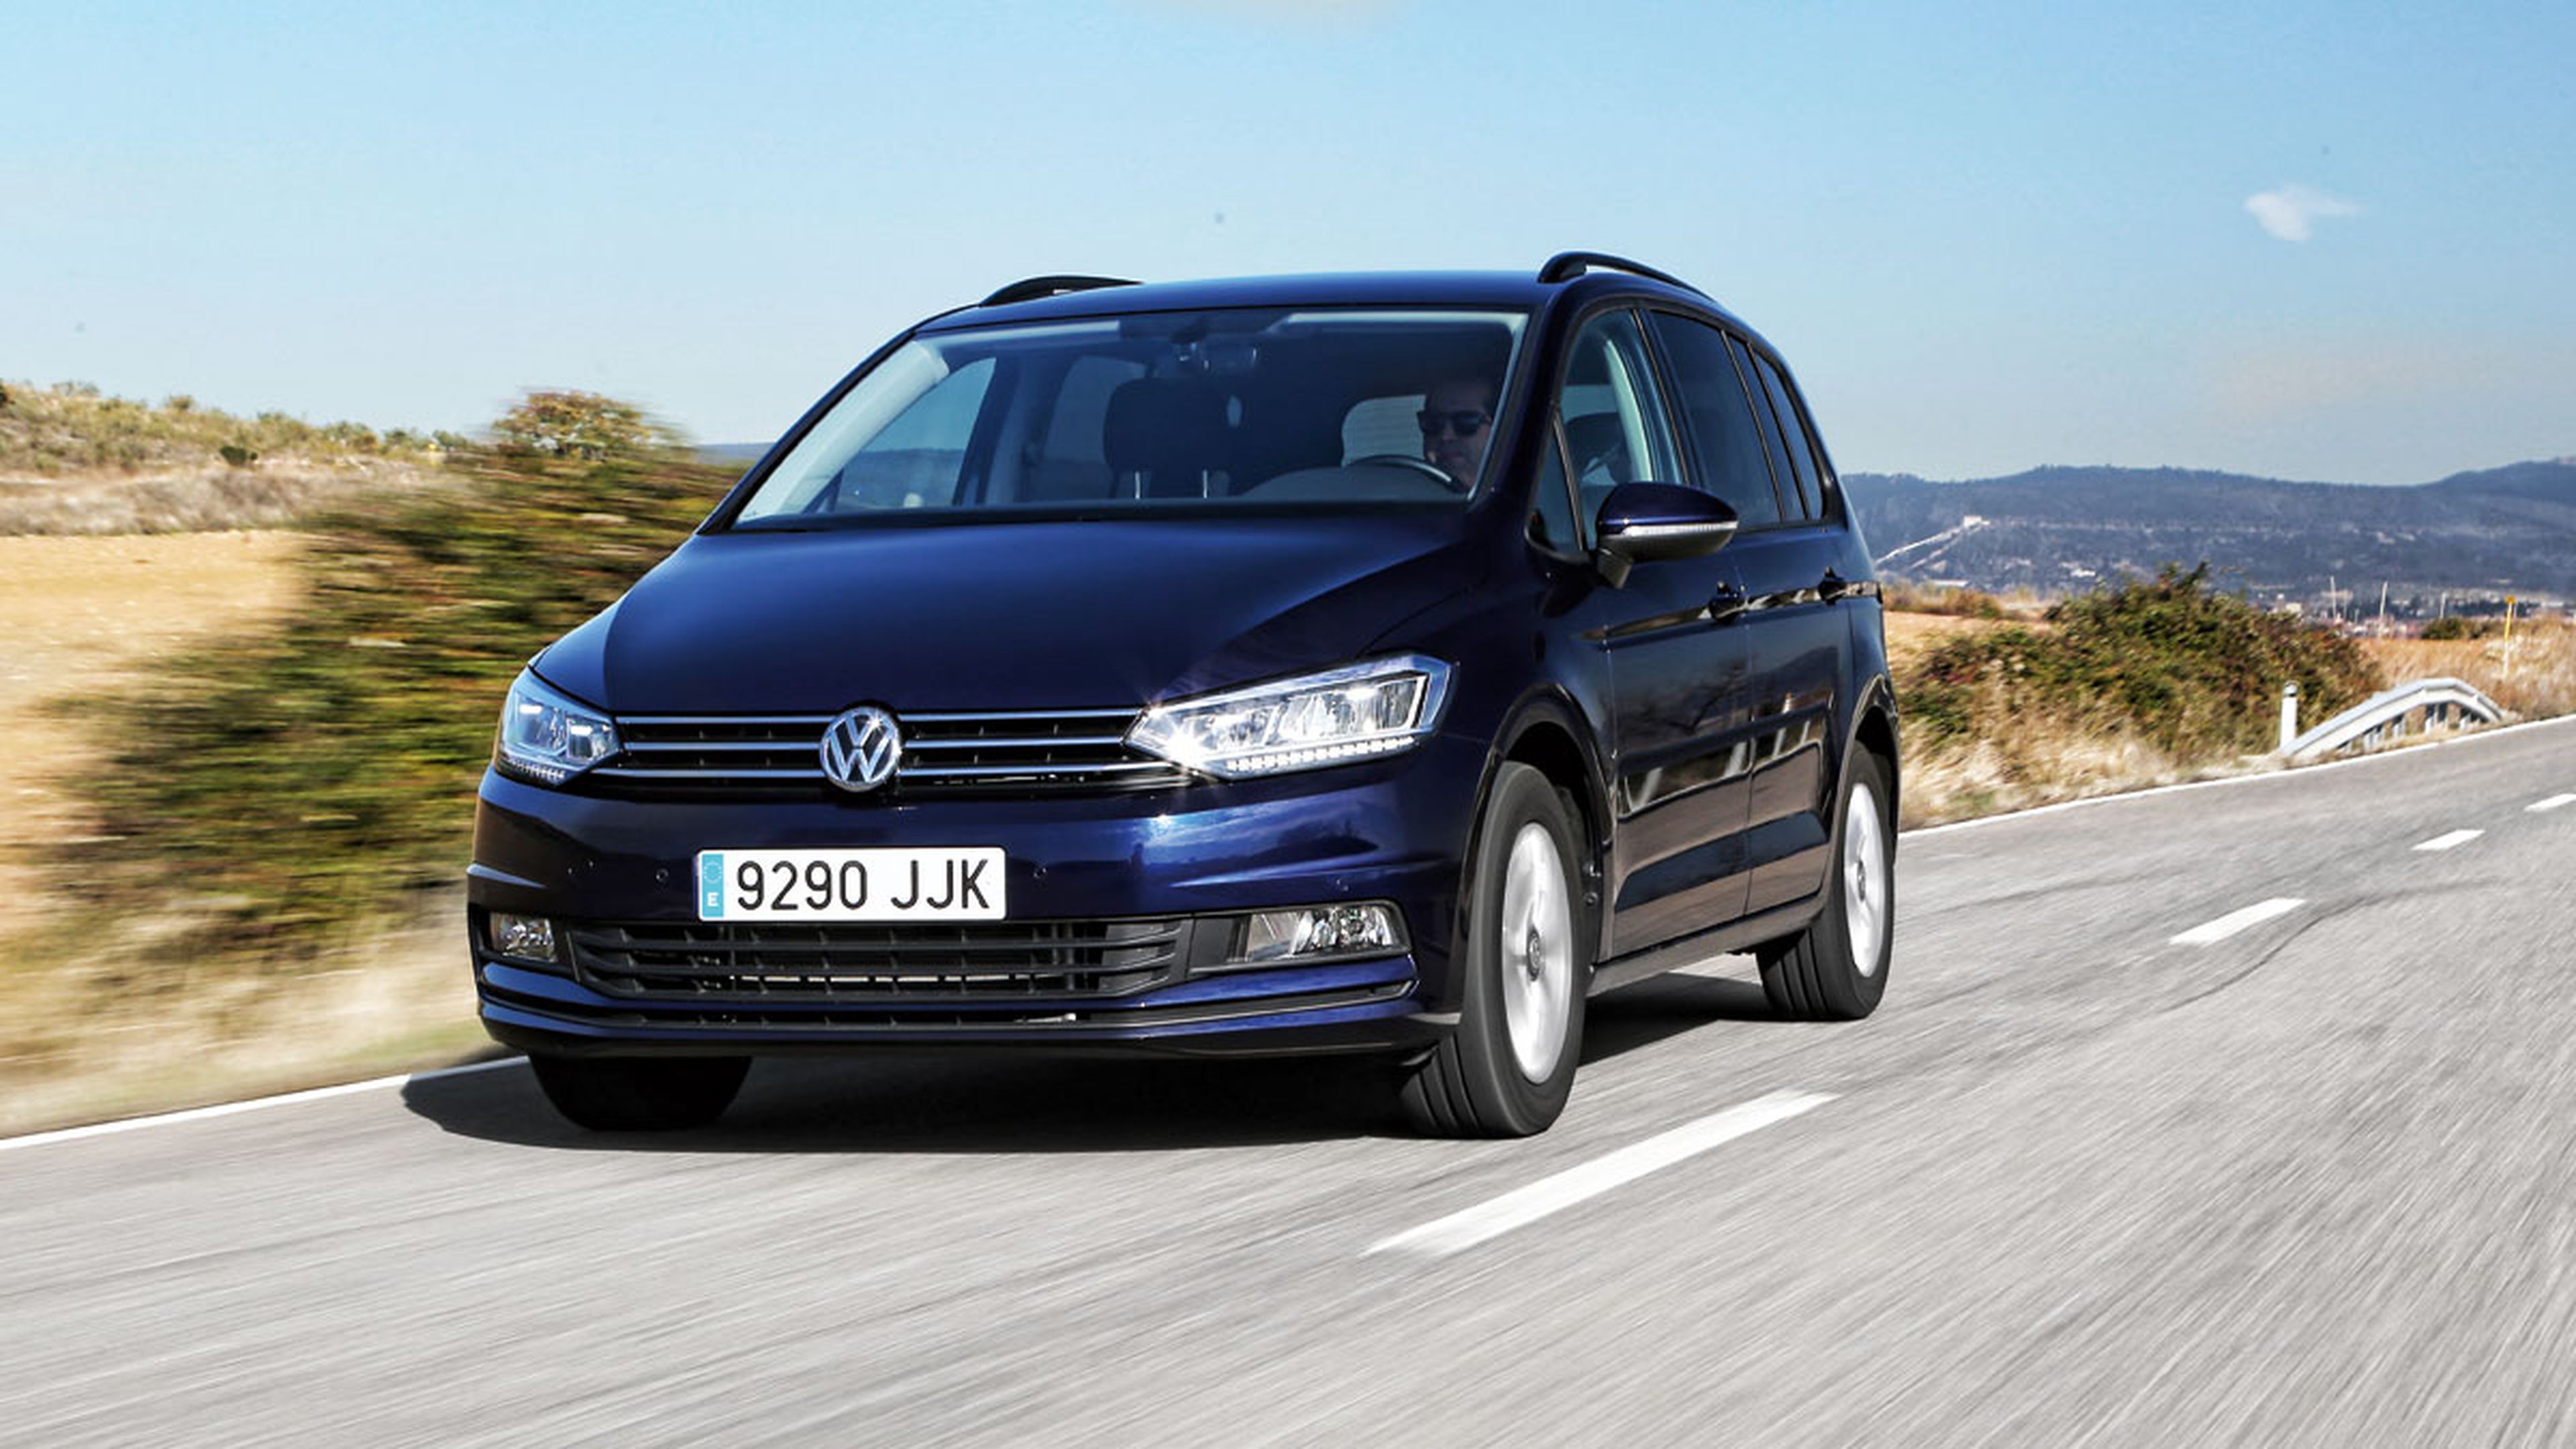 Prueba del Volkswagen Touran 2.0 TSI, ¿mejor que el diésel?